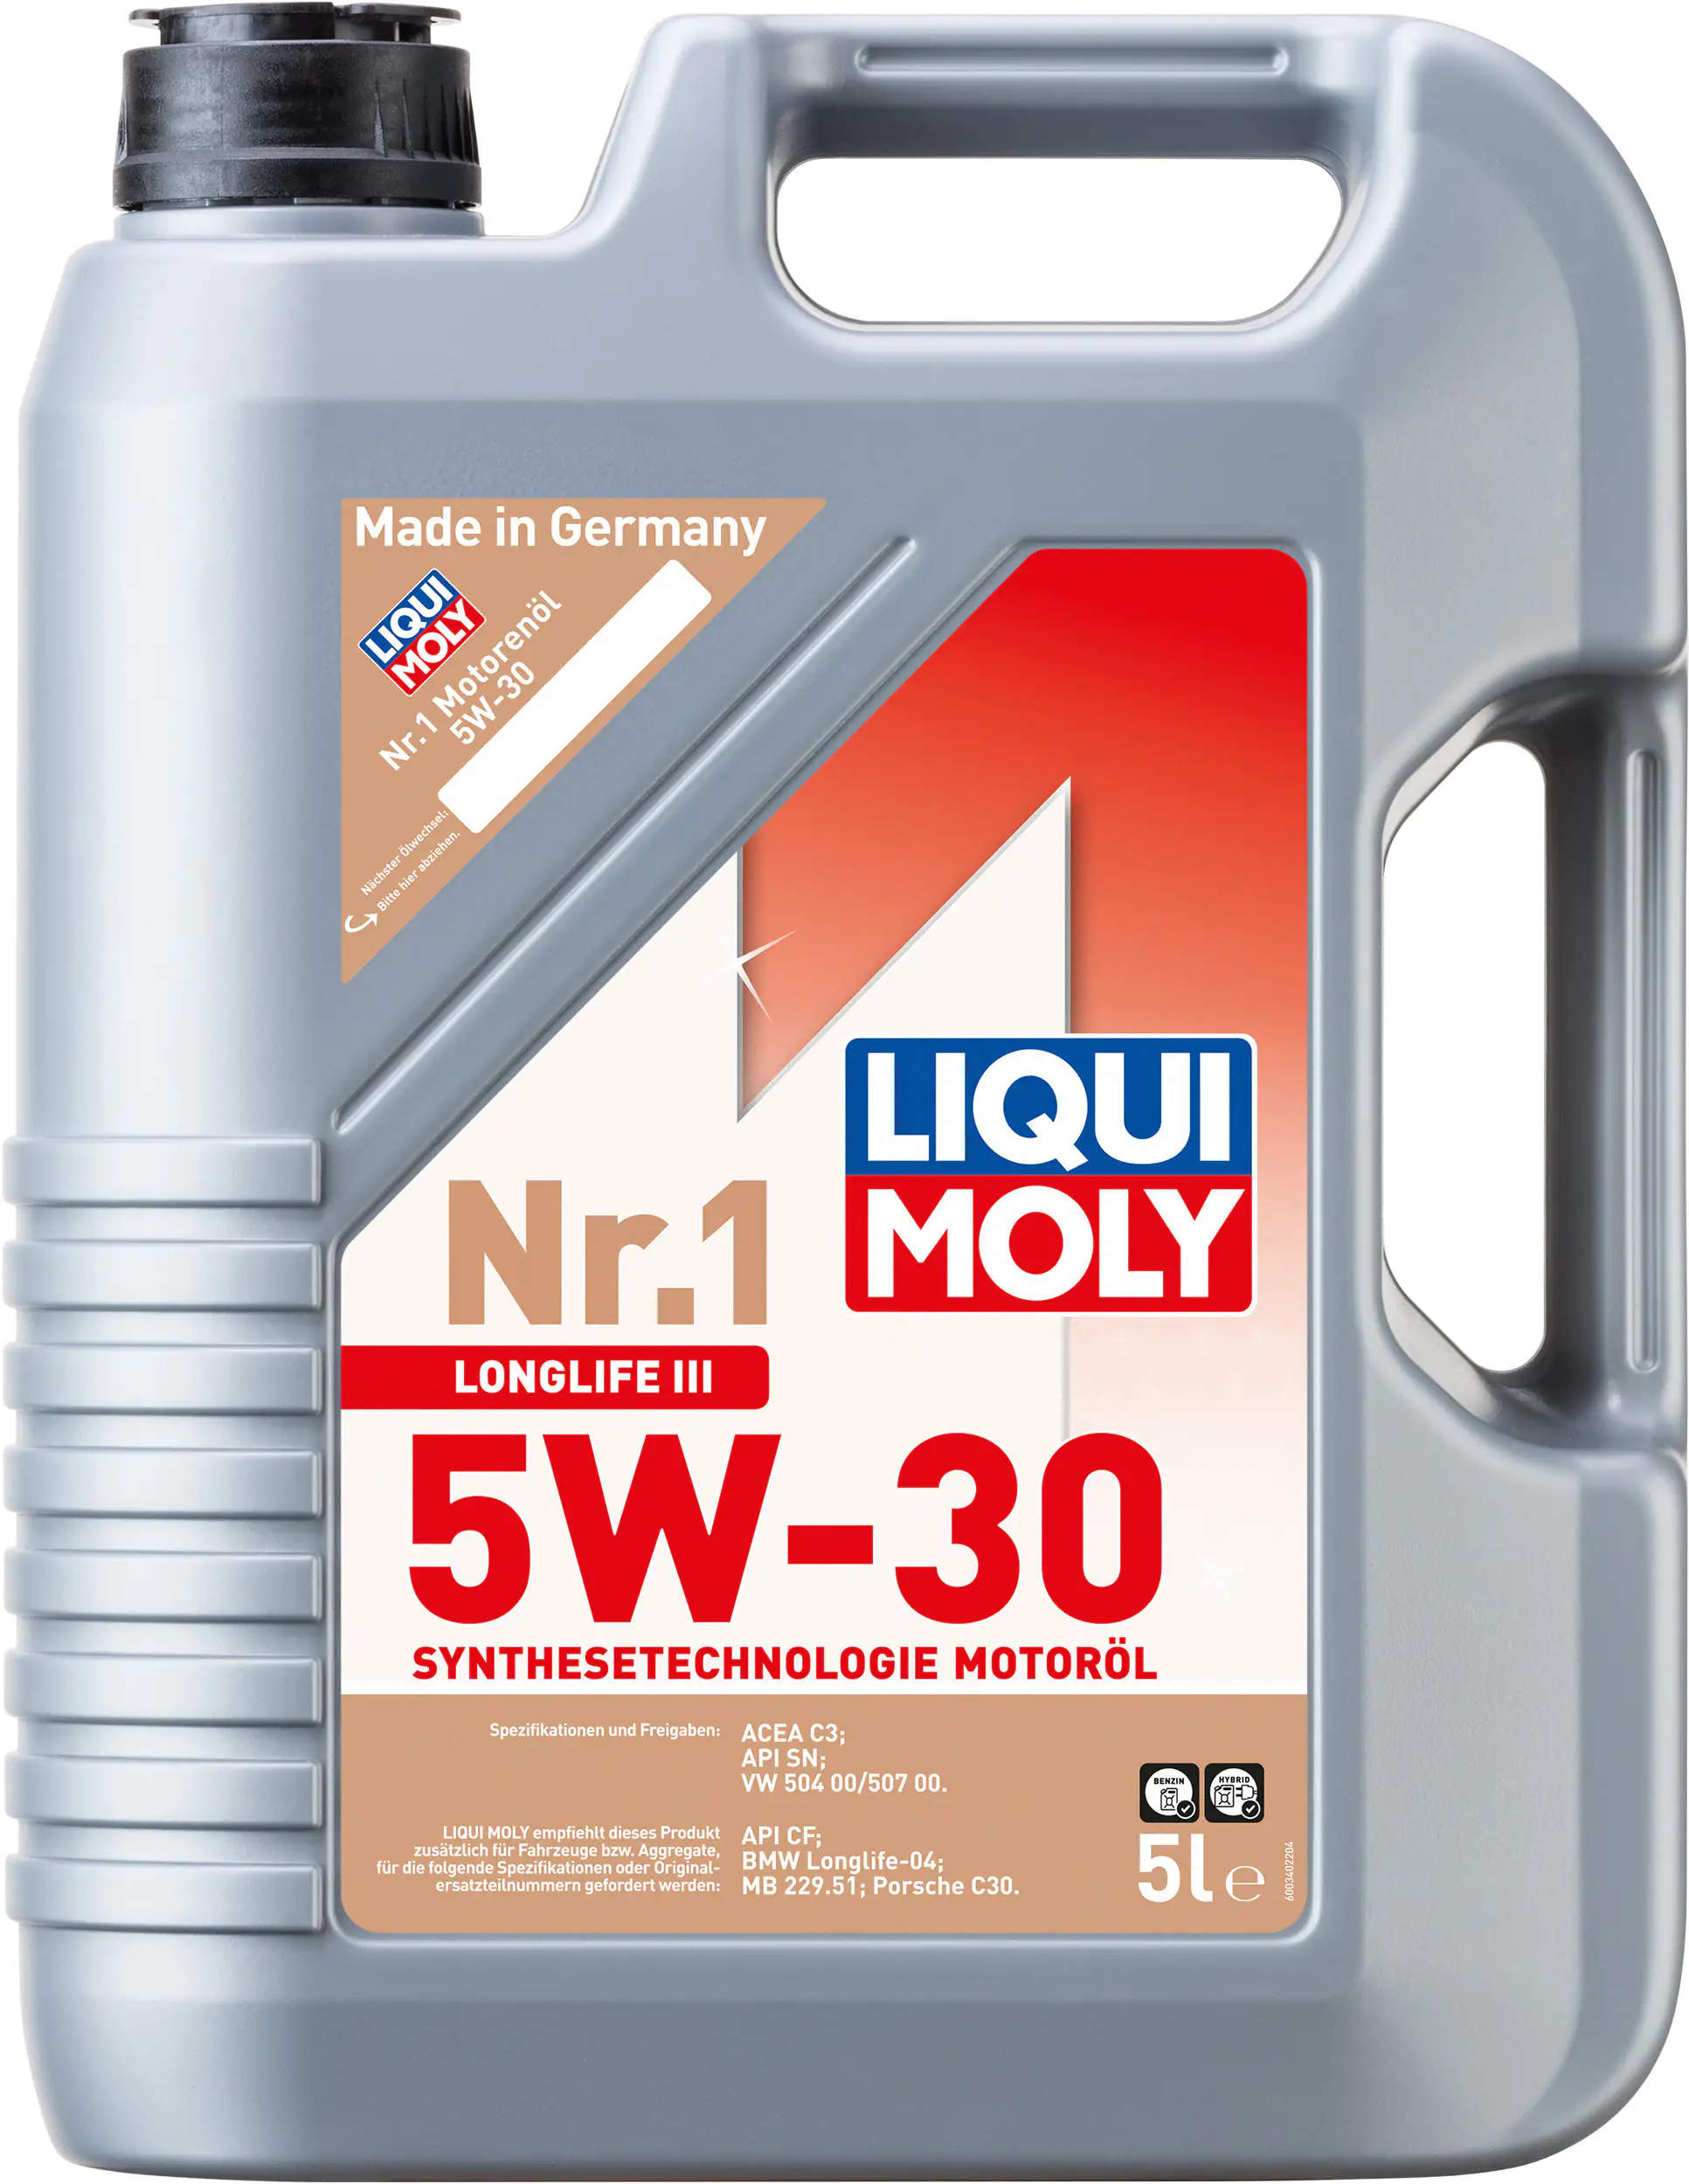 Liqui Moly Motoröl Nr.1 Longlife III 5W-30 5 L kaufen